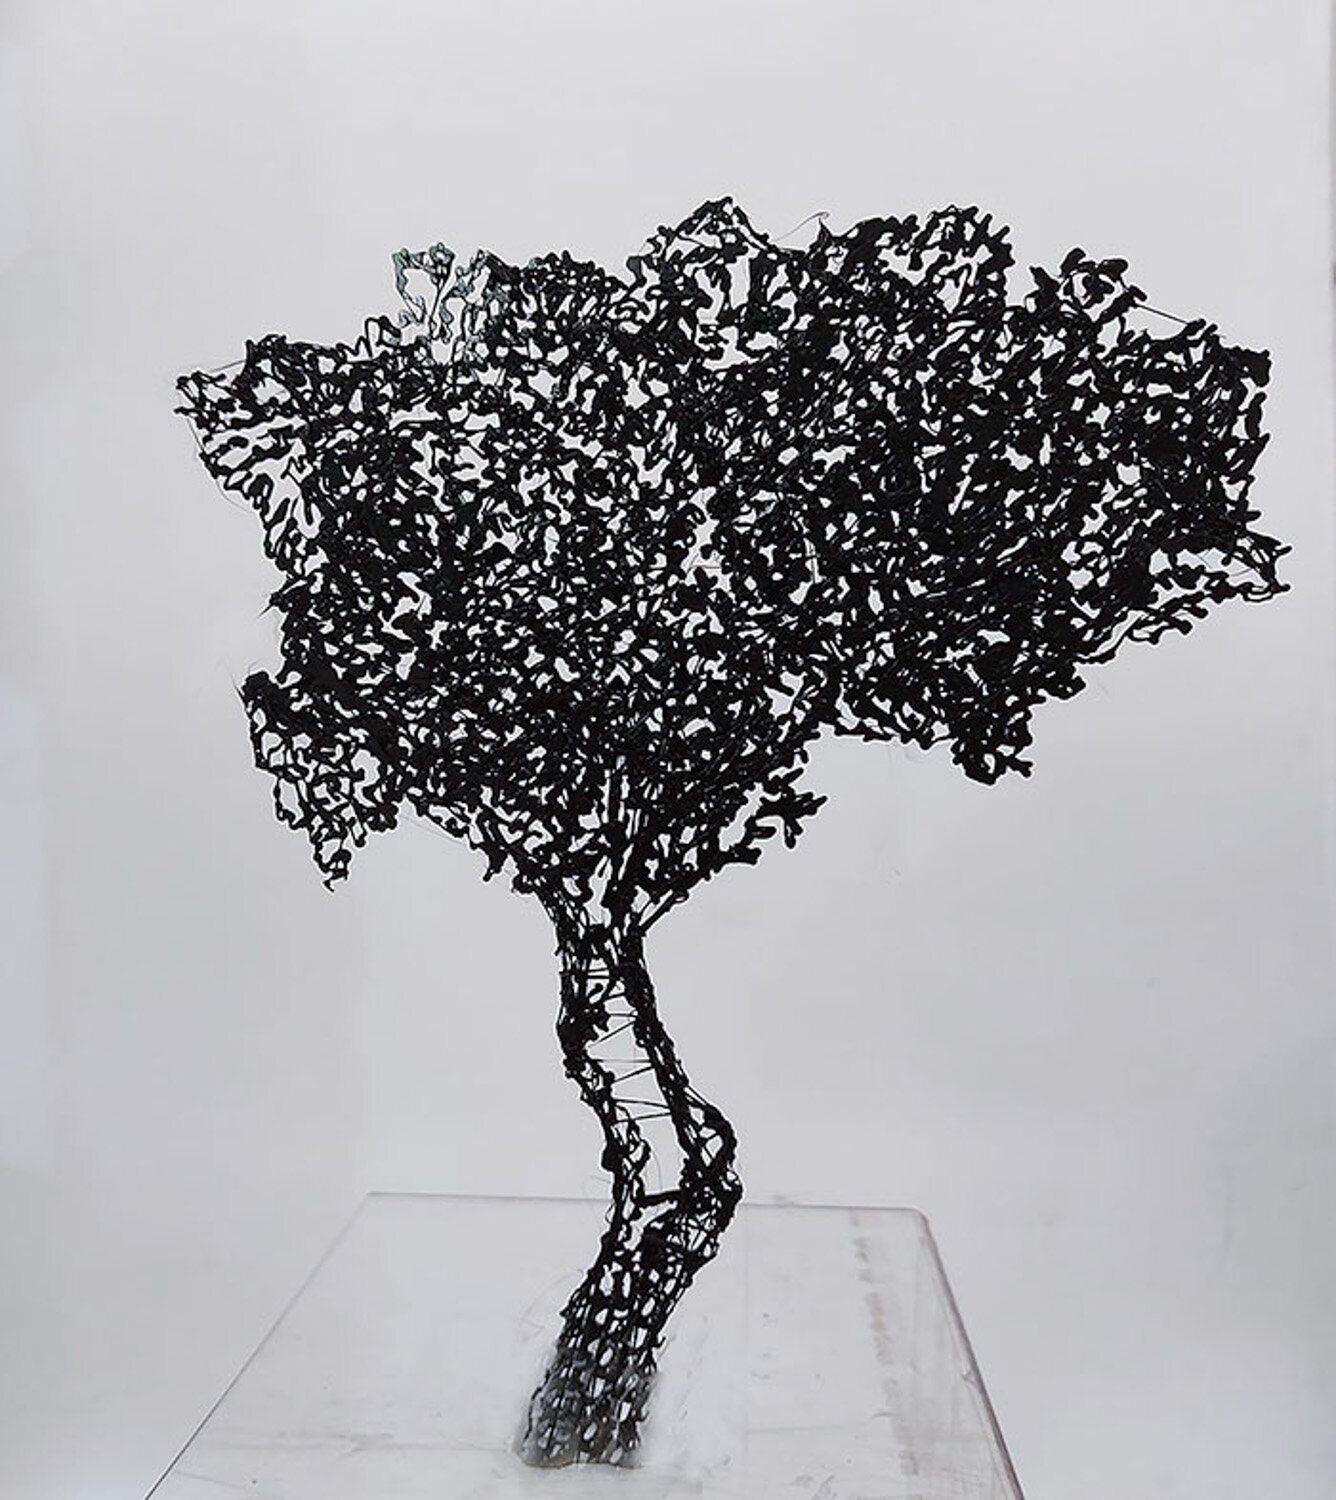 Hagar Zeevi, PLA garden, 3d pen drawing, 2021